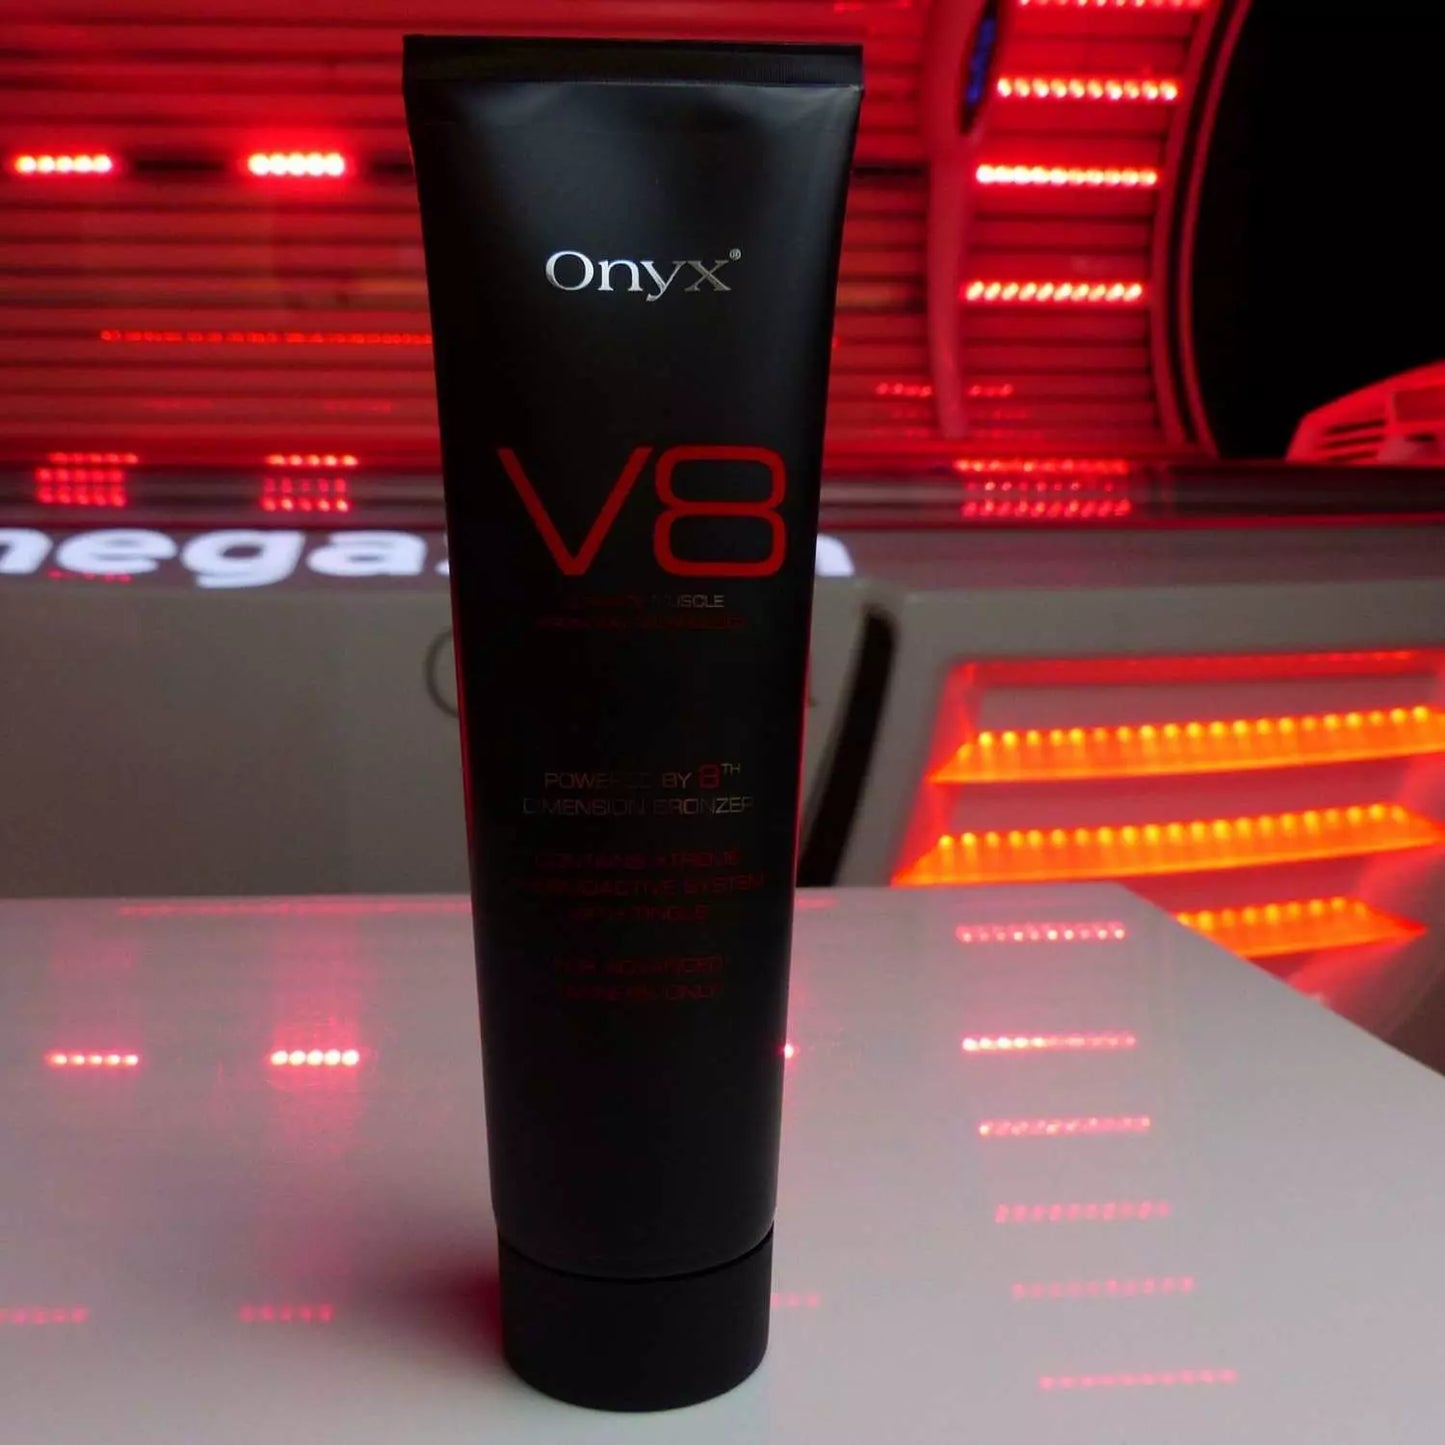 Onyx V8 kosmetic mit tingle fur solarium